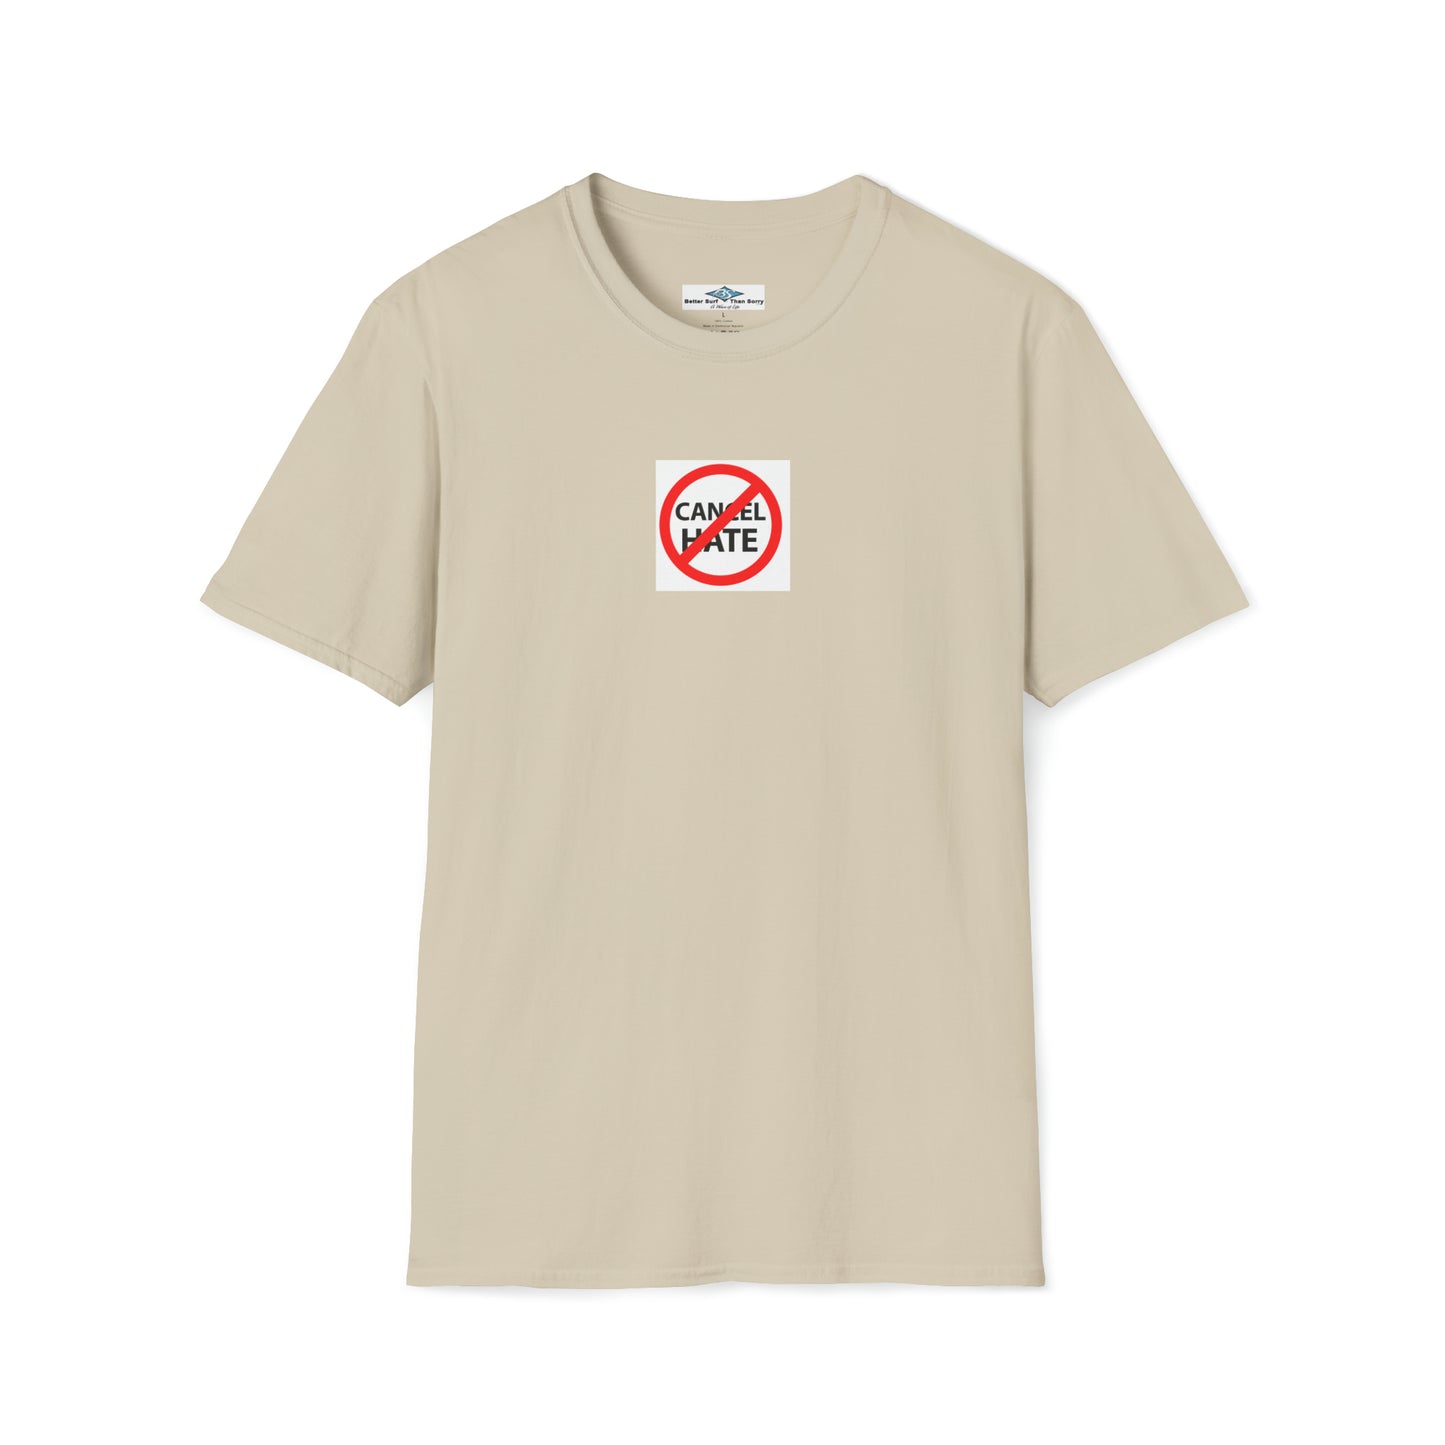 Cancel Hate t-shirt